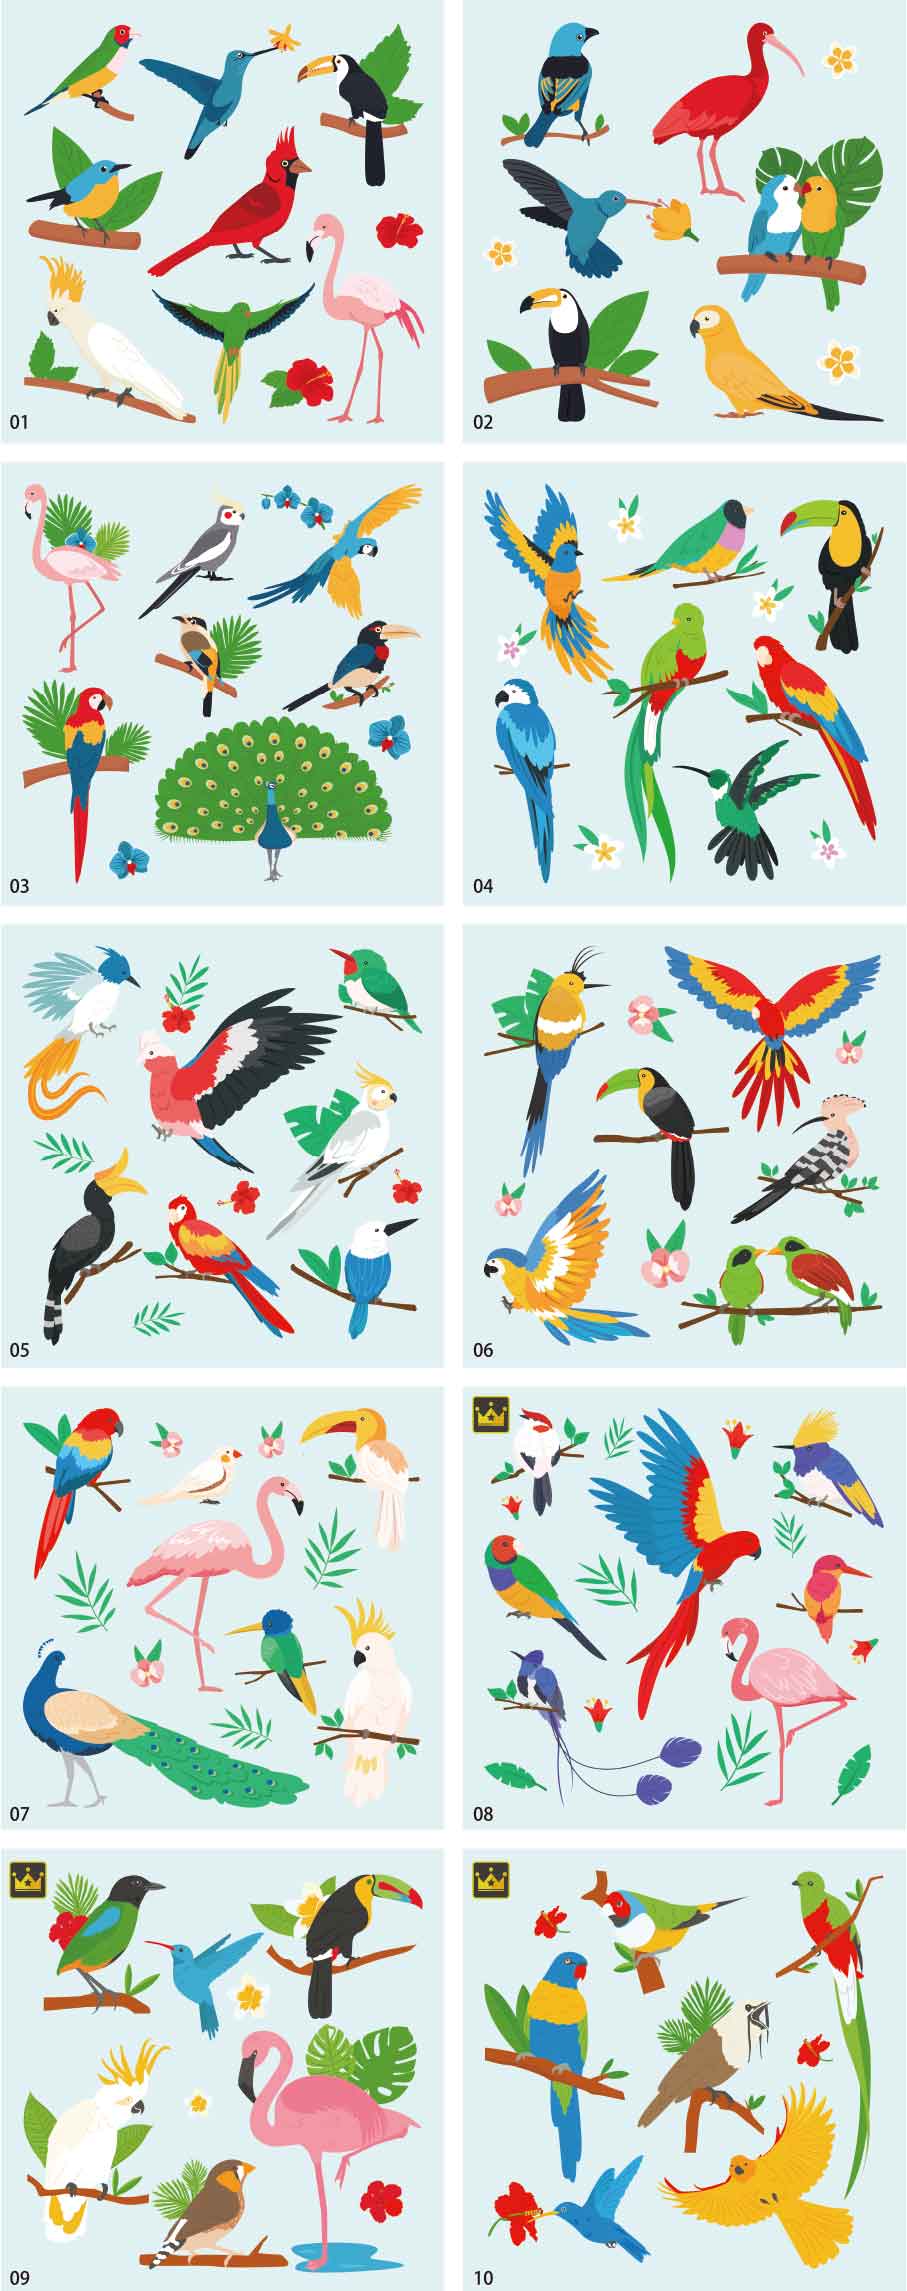 Tropical bird illustration collection